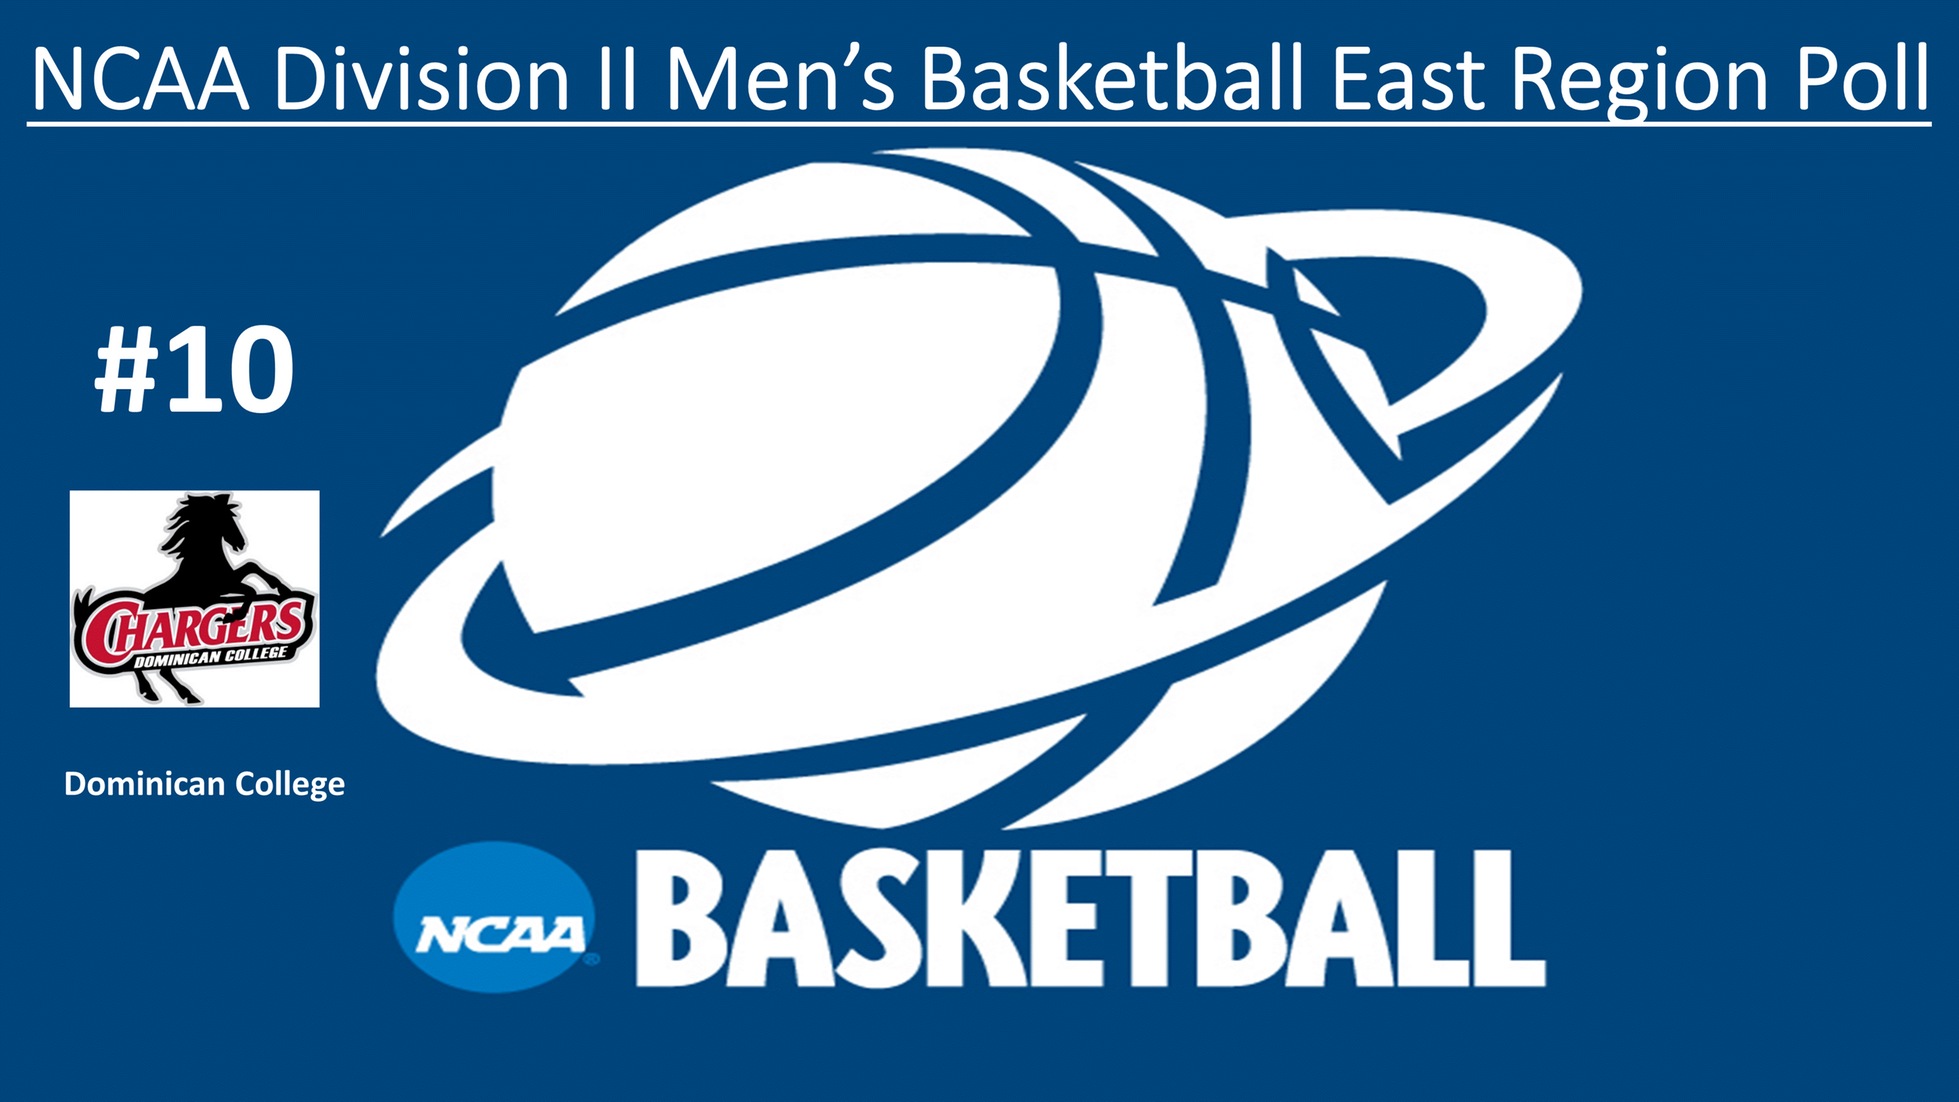 MEN'S BASKETBALL SLIP IN LATEST NCAA DIVISION II EAST REGION RANKINGS